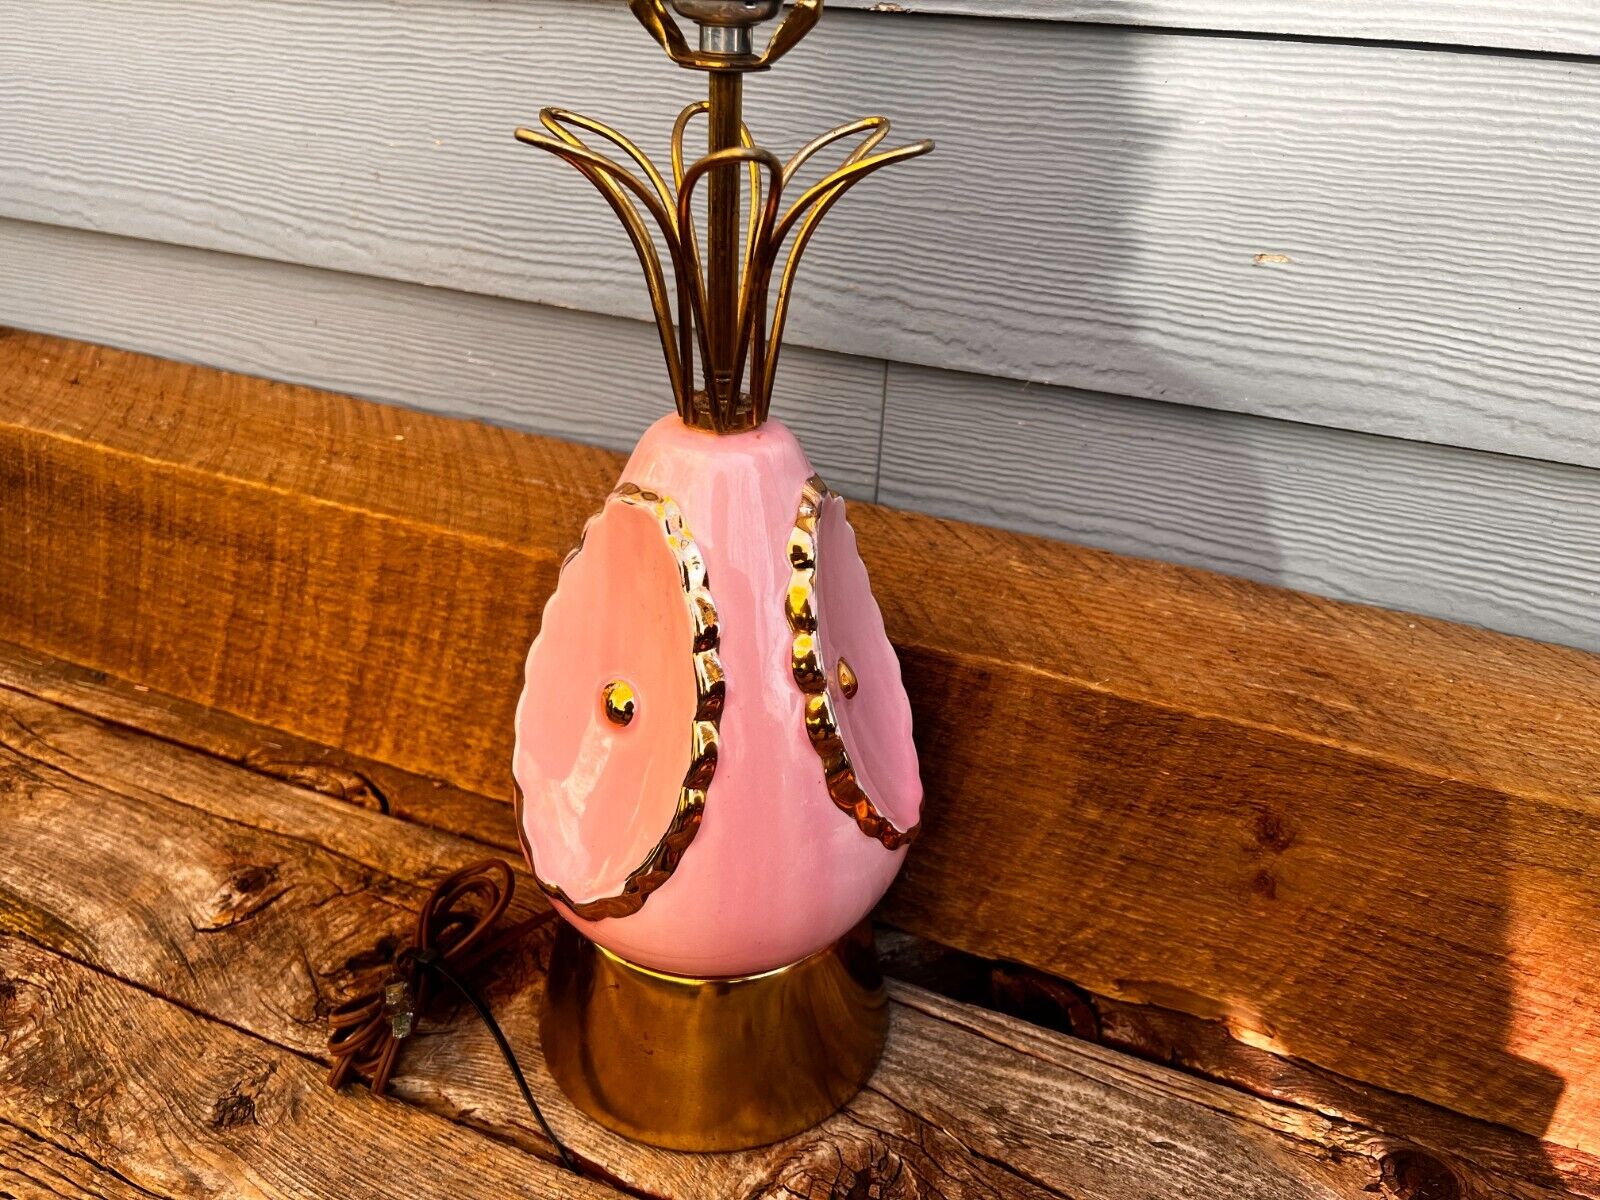 Vintage Pink MCM Table Lamp Retro Hollywood Regency Rare Unique Antique Works